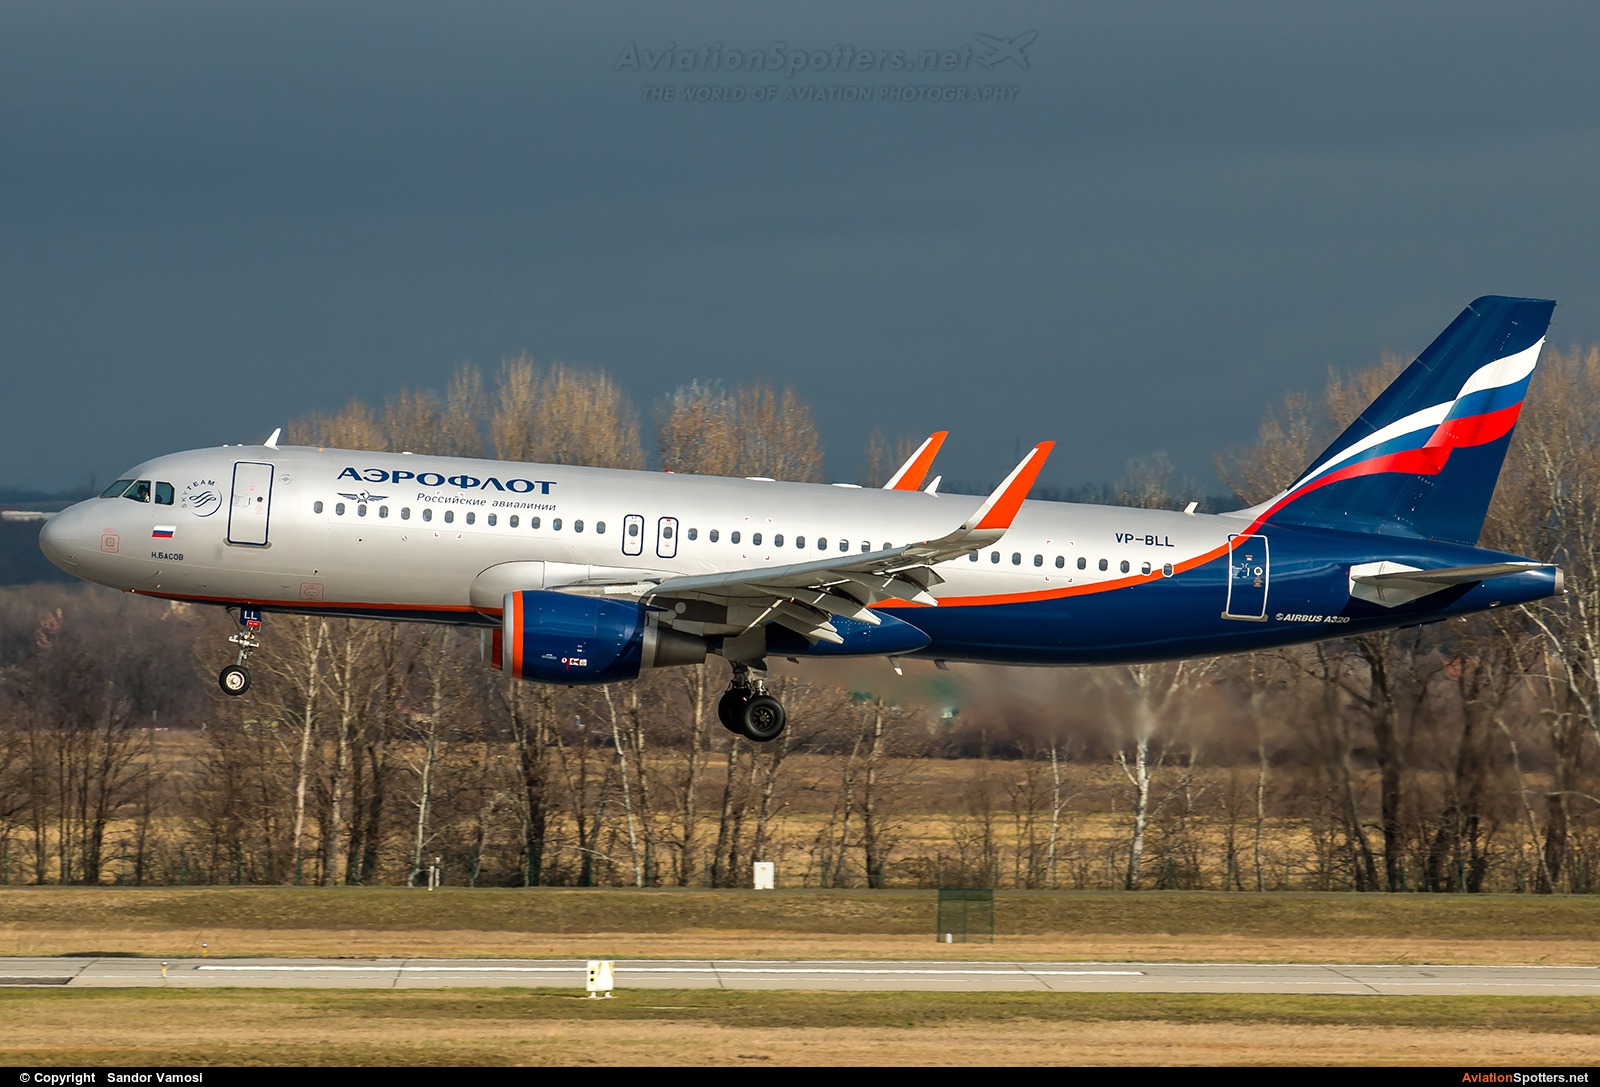 Aeroflot  -  A320  (VP-BLL) By Sandor Vamosi (ALEX67)